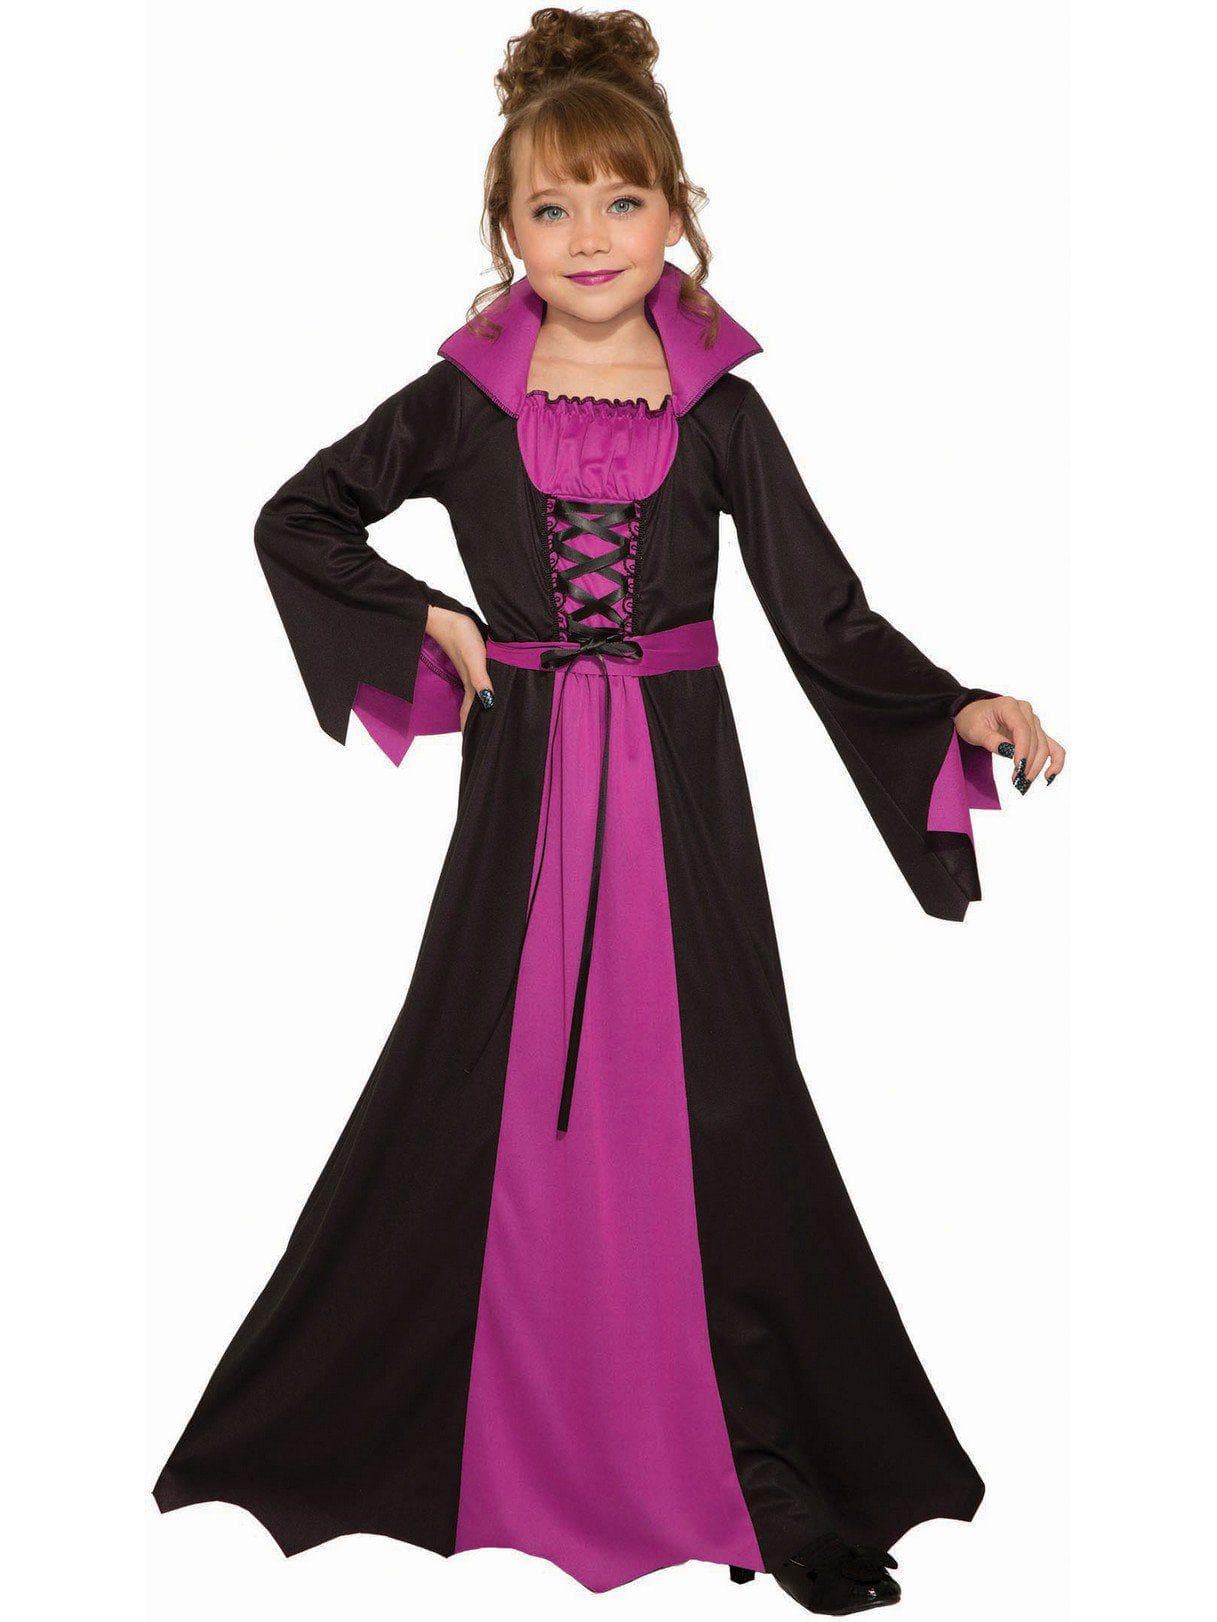 Kid's Promo Sorceress Costume - costumes.com